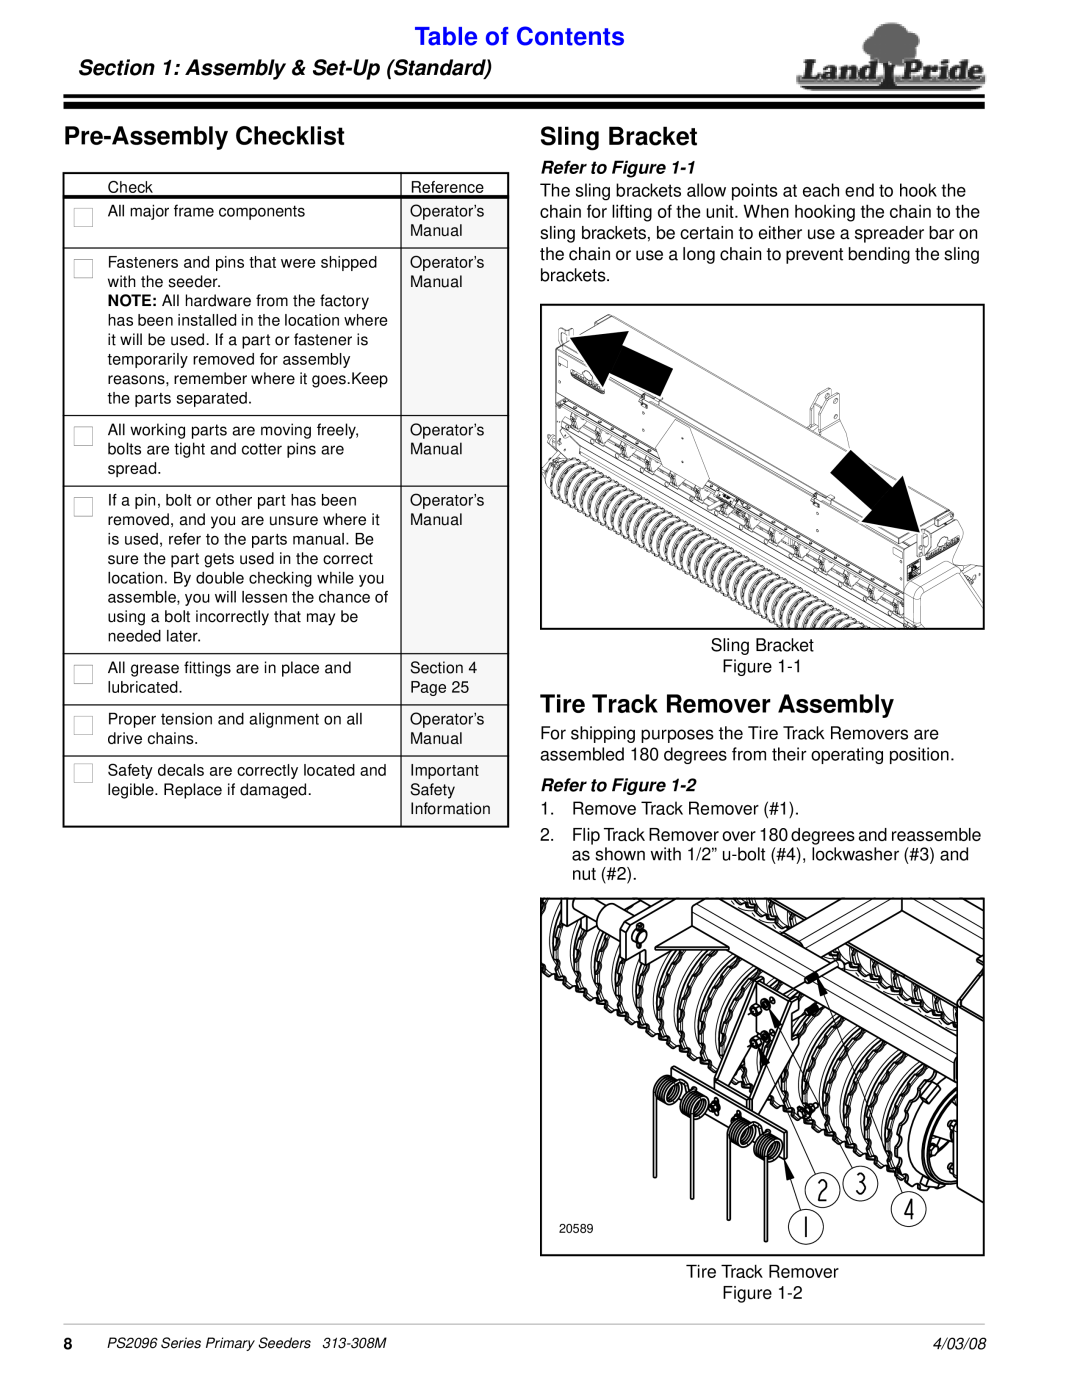 Land Pride 313-308M manual Pre-Assembly Checklist, Sling Bracket, Tire Track Remover Assembly, Assembly & Set-Up Standard 